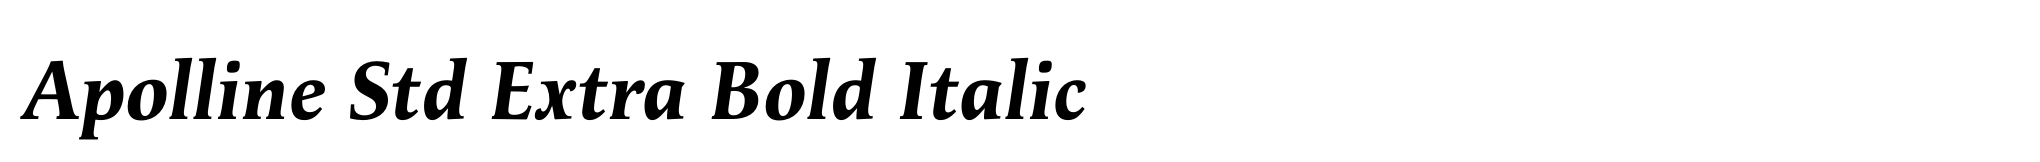 Apolline Std Extra Bold Italic image